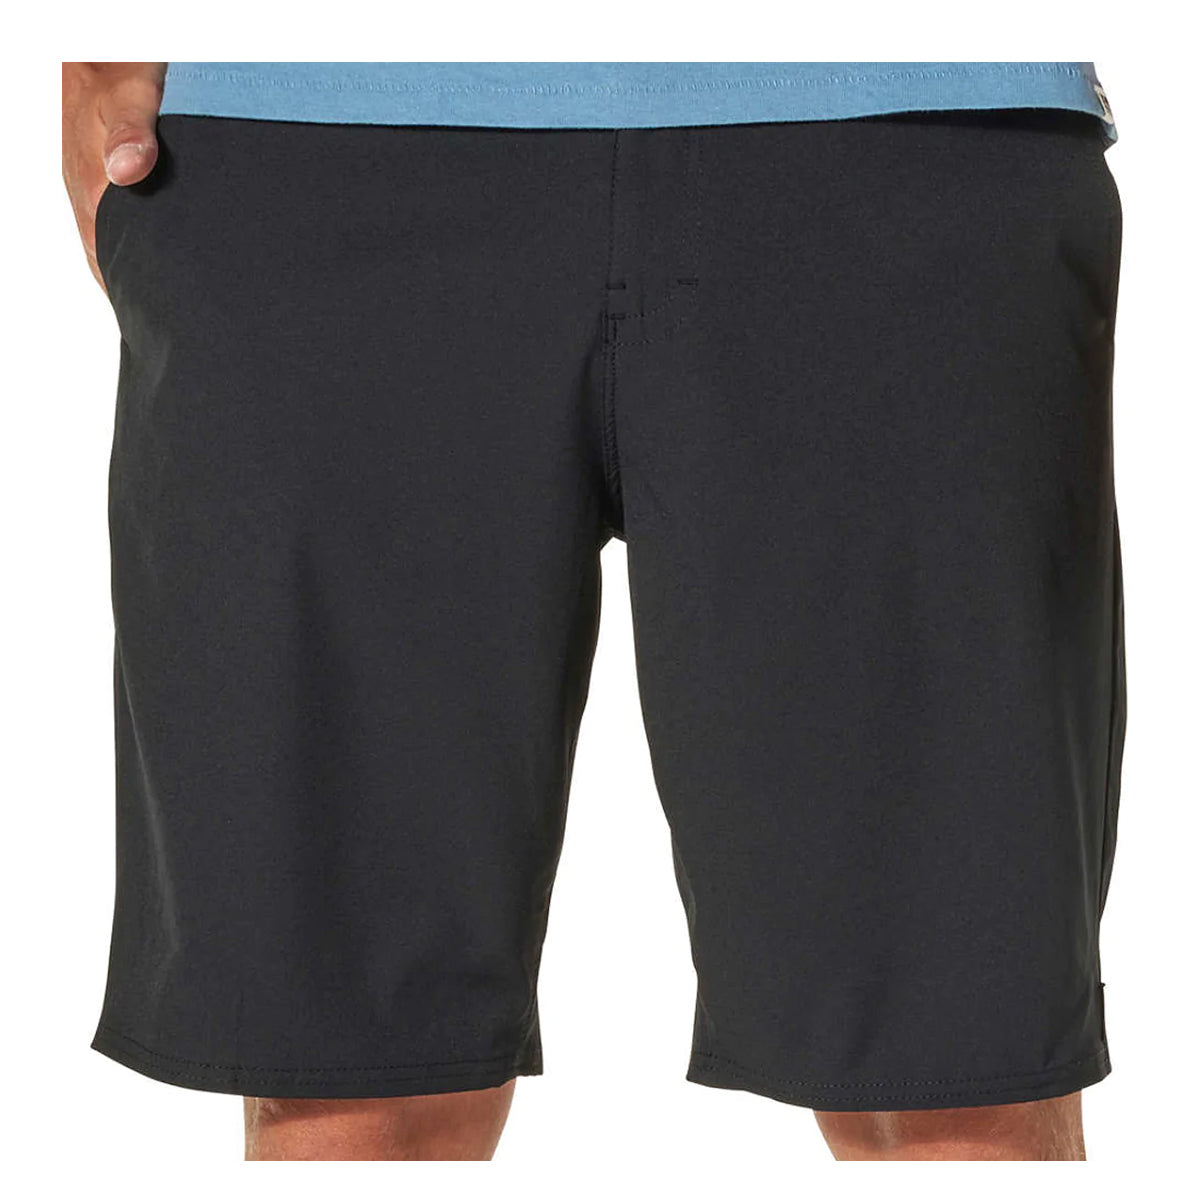 Reef Warm Water 6 Men's Walkshort Shorts